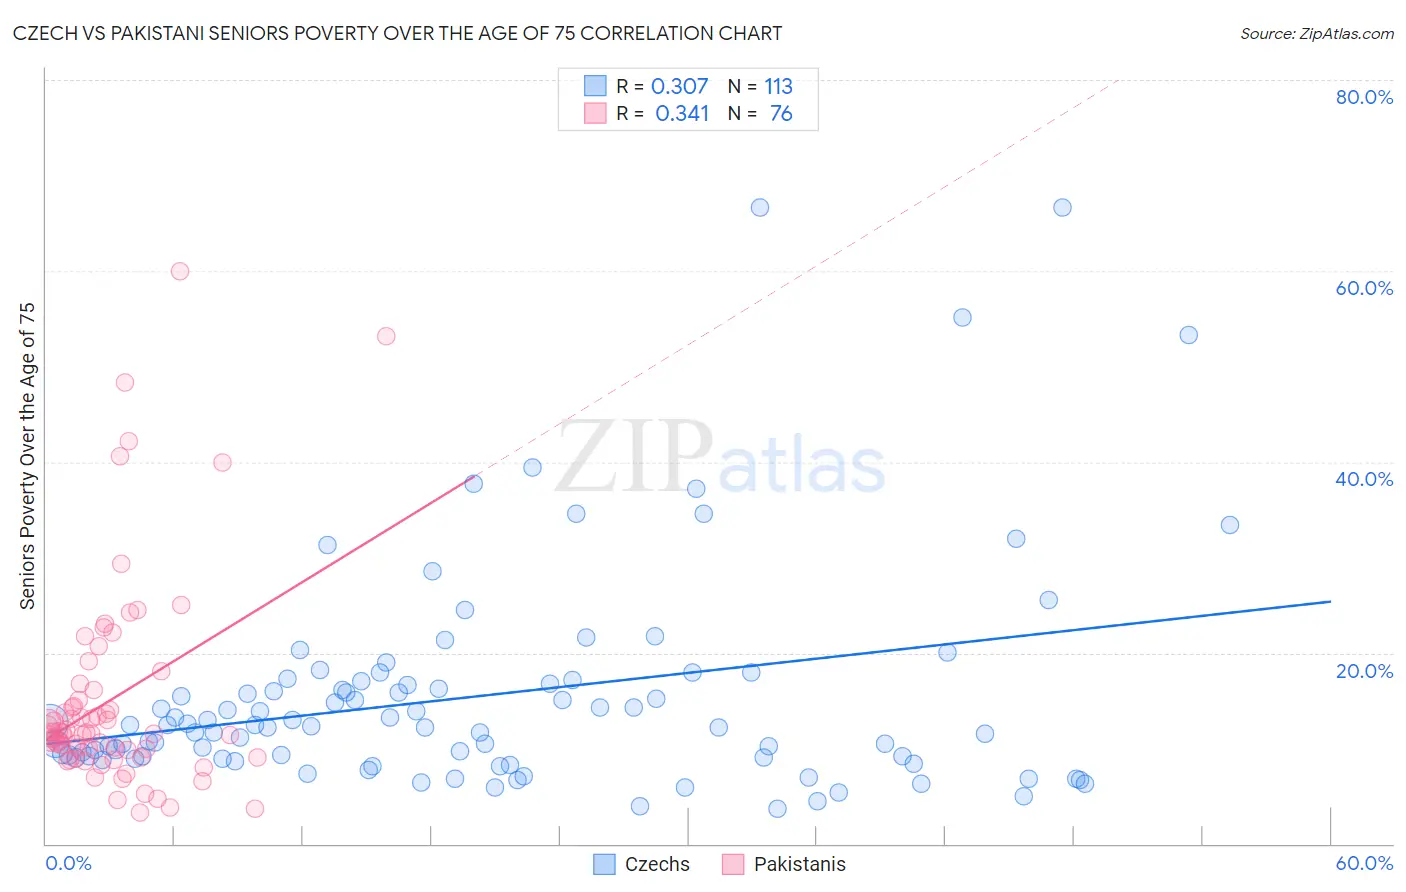 Czech vs Pakistani Seniors Poverty Over the Age of 75